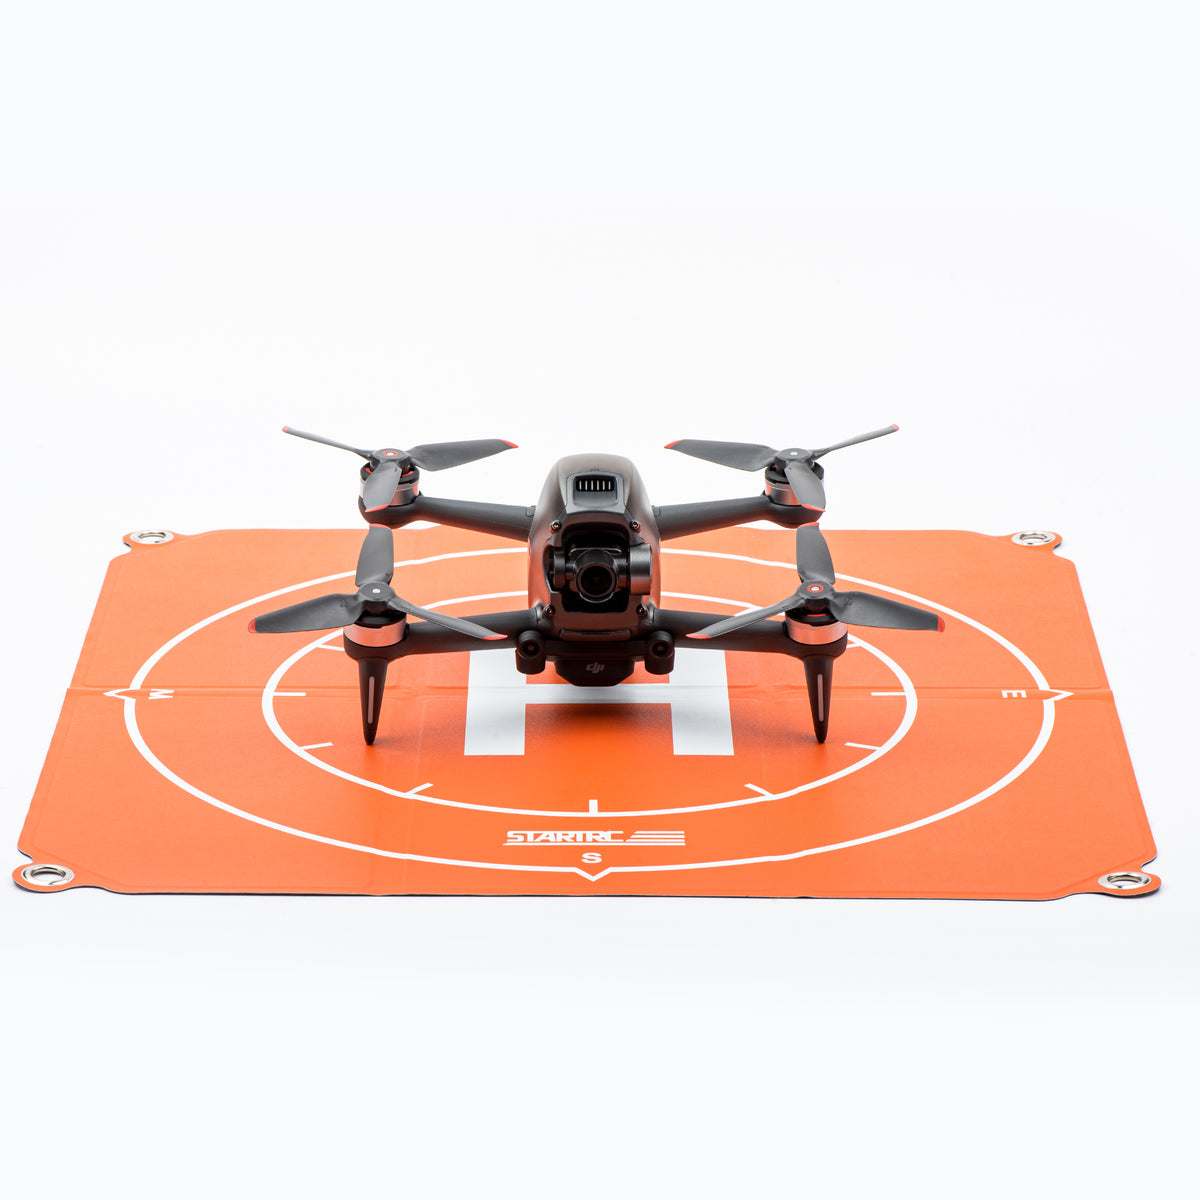 Drones Landing Pad,Quadcopter Landing Pad Accessories 55cm Soft Landing Gear Surface Waterproof Nylon Protective Fast-fold Apron for DJI Mavic Pro/Mavic Air/Spark #81243 